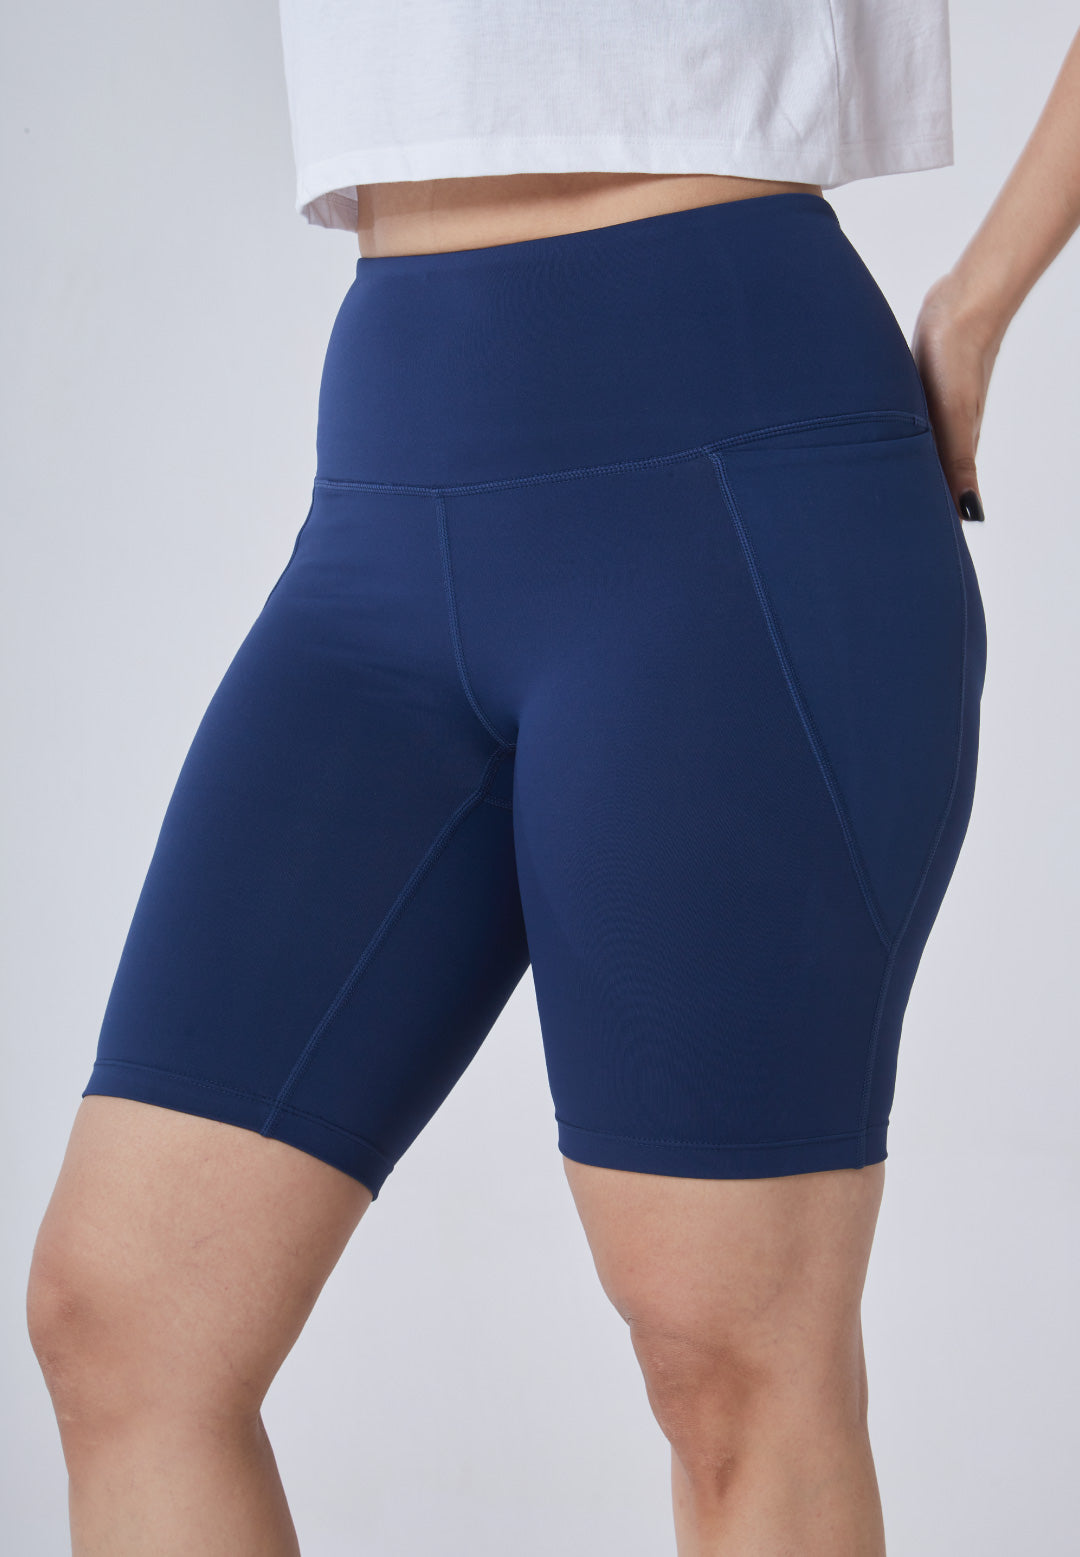 Buy Women Shorts Online